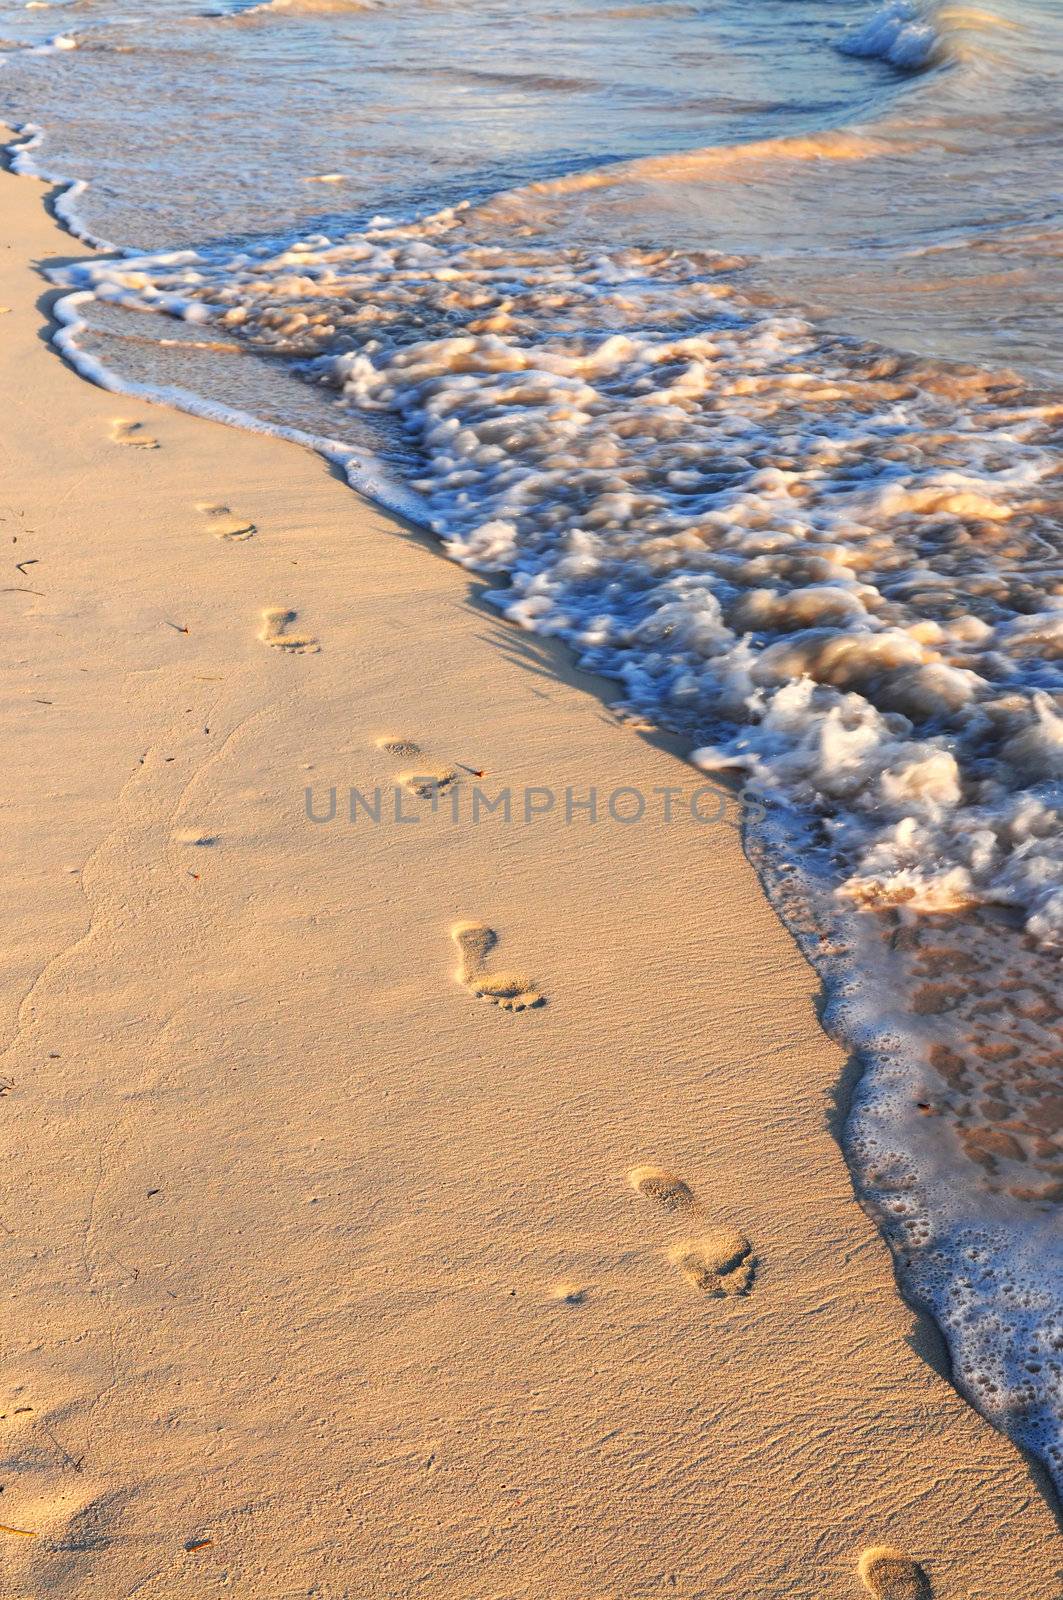 Footprints on sandy beach by elenathewise